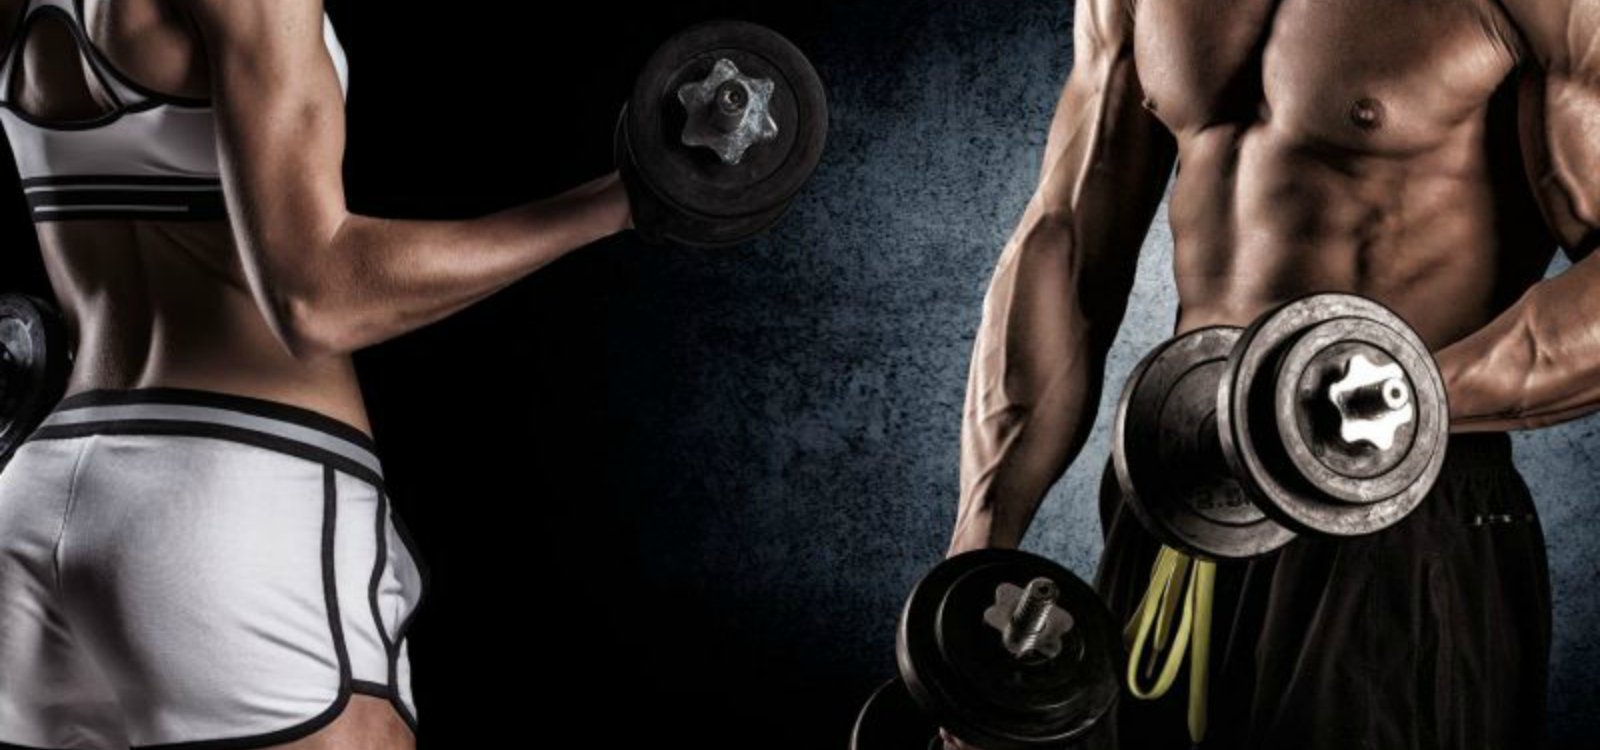 free weights vs machines bodybuilding